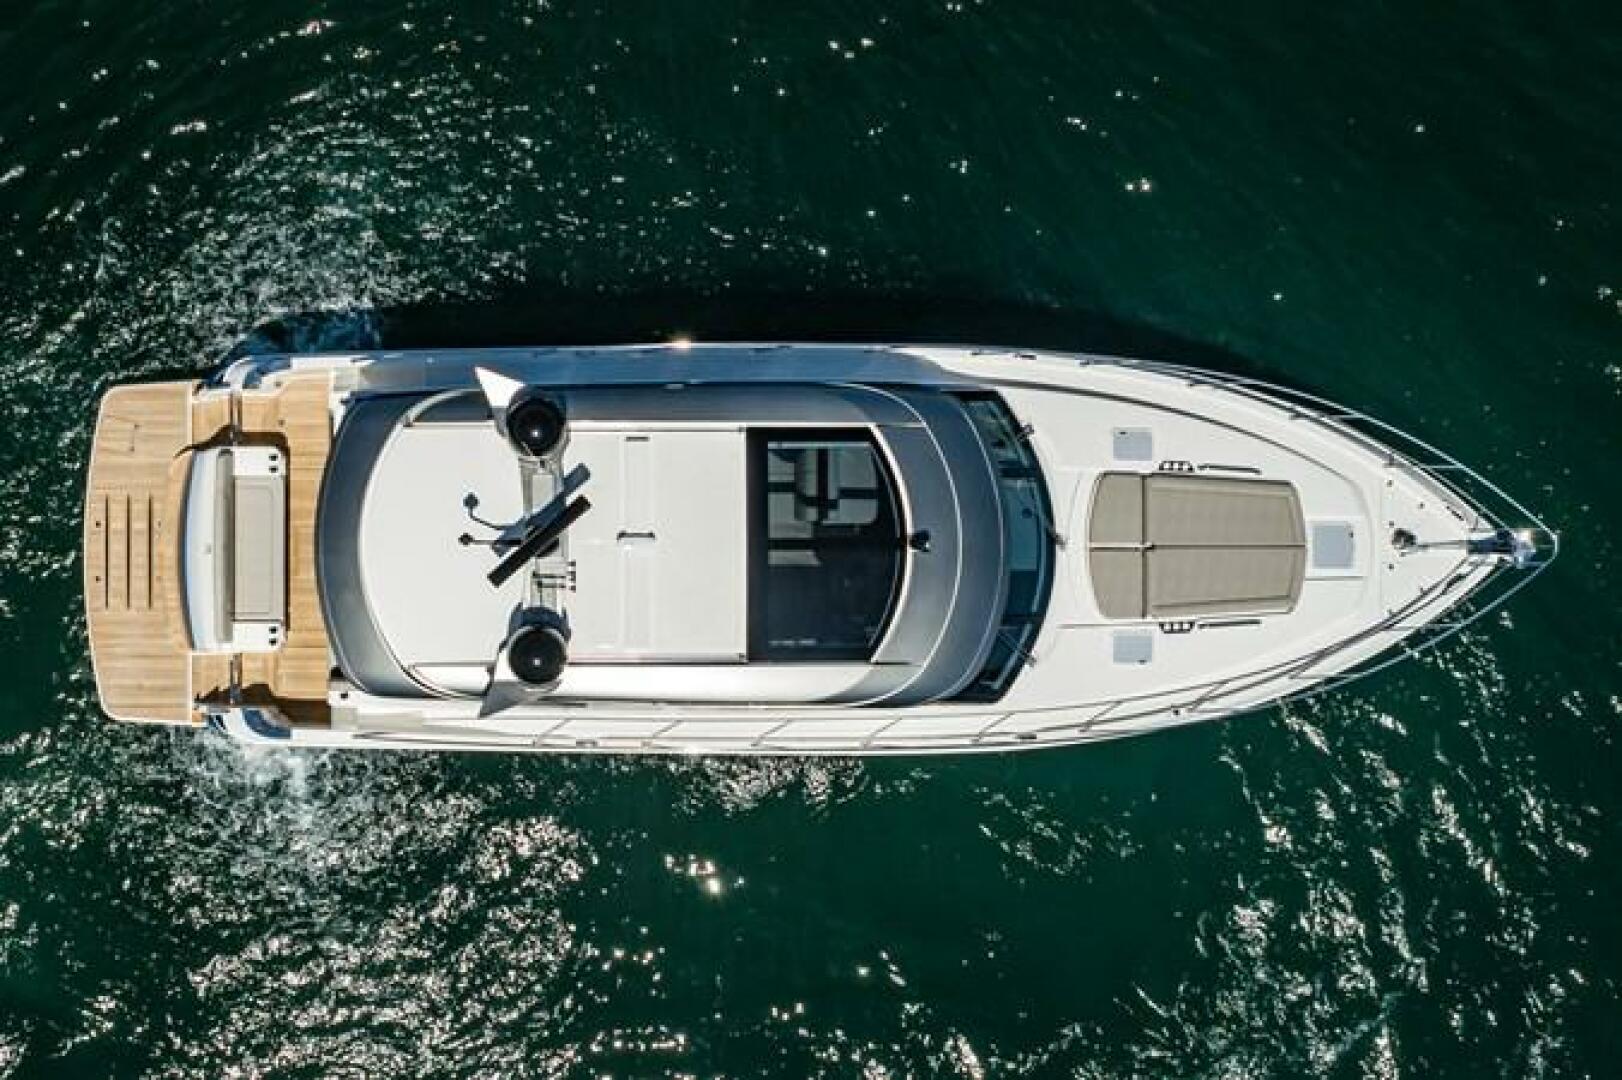 2021 Newport 5400 sport yacht